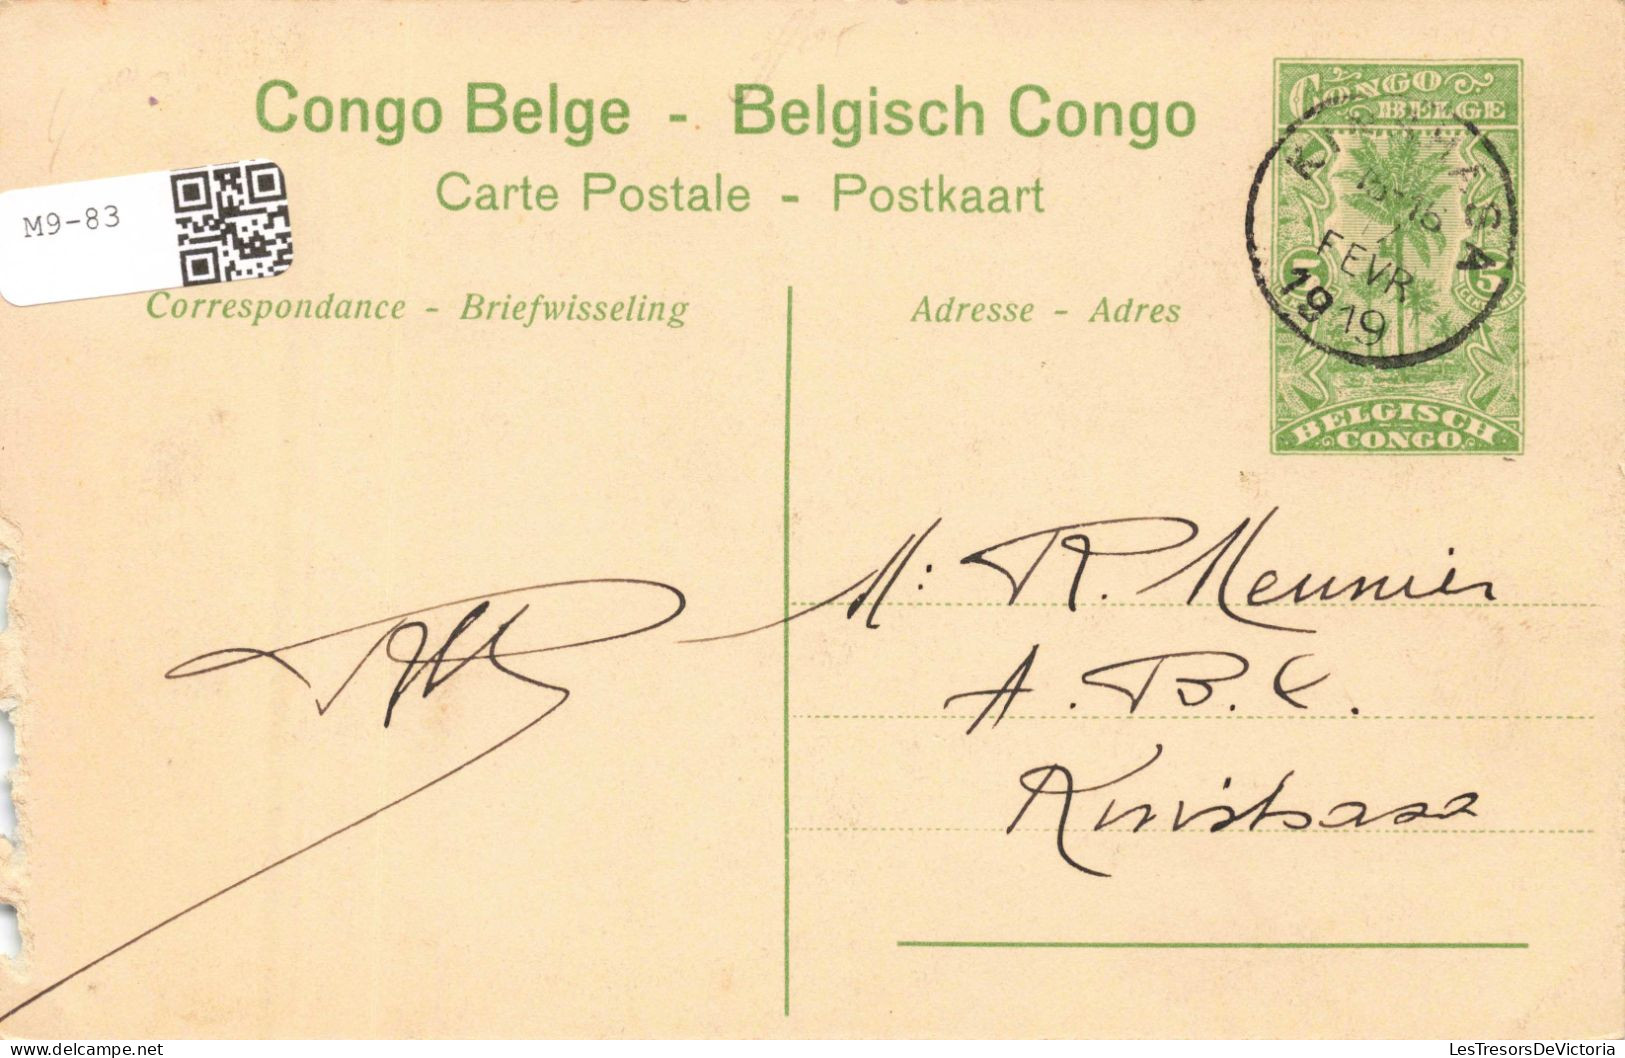 CONGO KINSHASA - Congo Belge - Kabinda - Corps De Garde Et La Prison - Carte Postale Ancienne - Belgisch-Congo